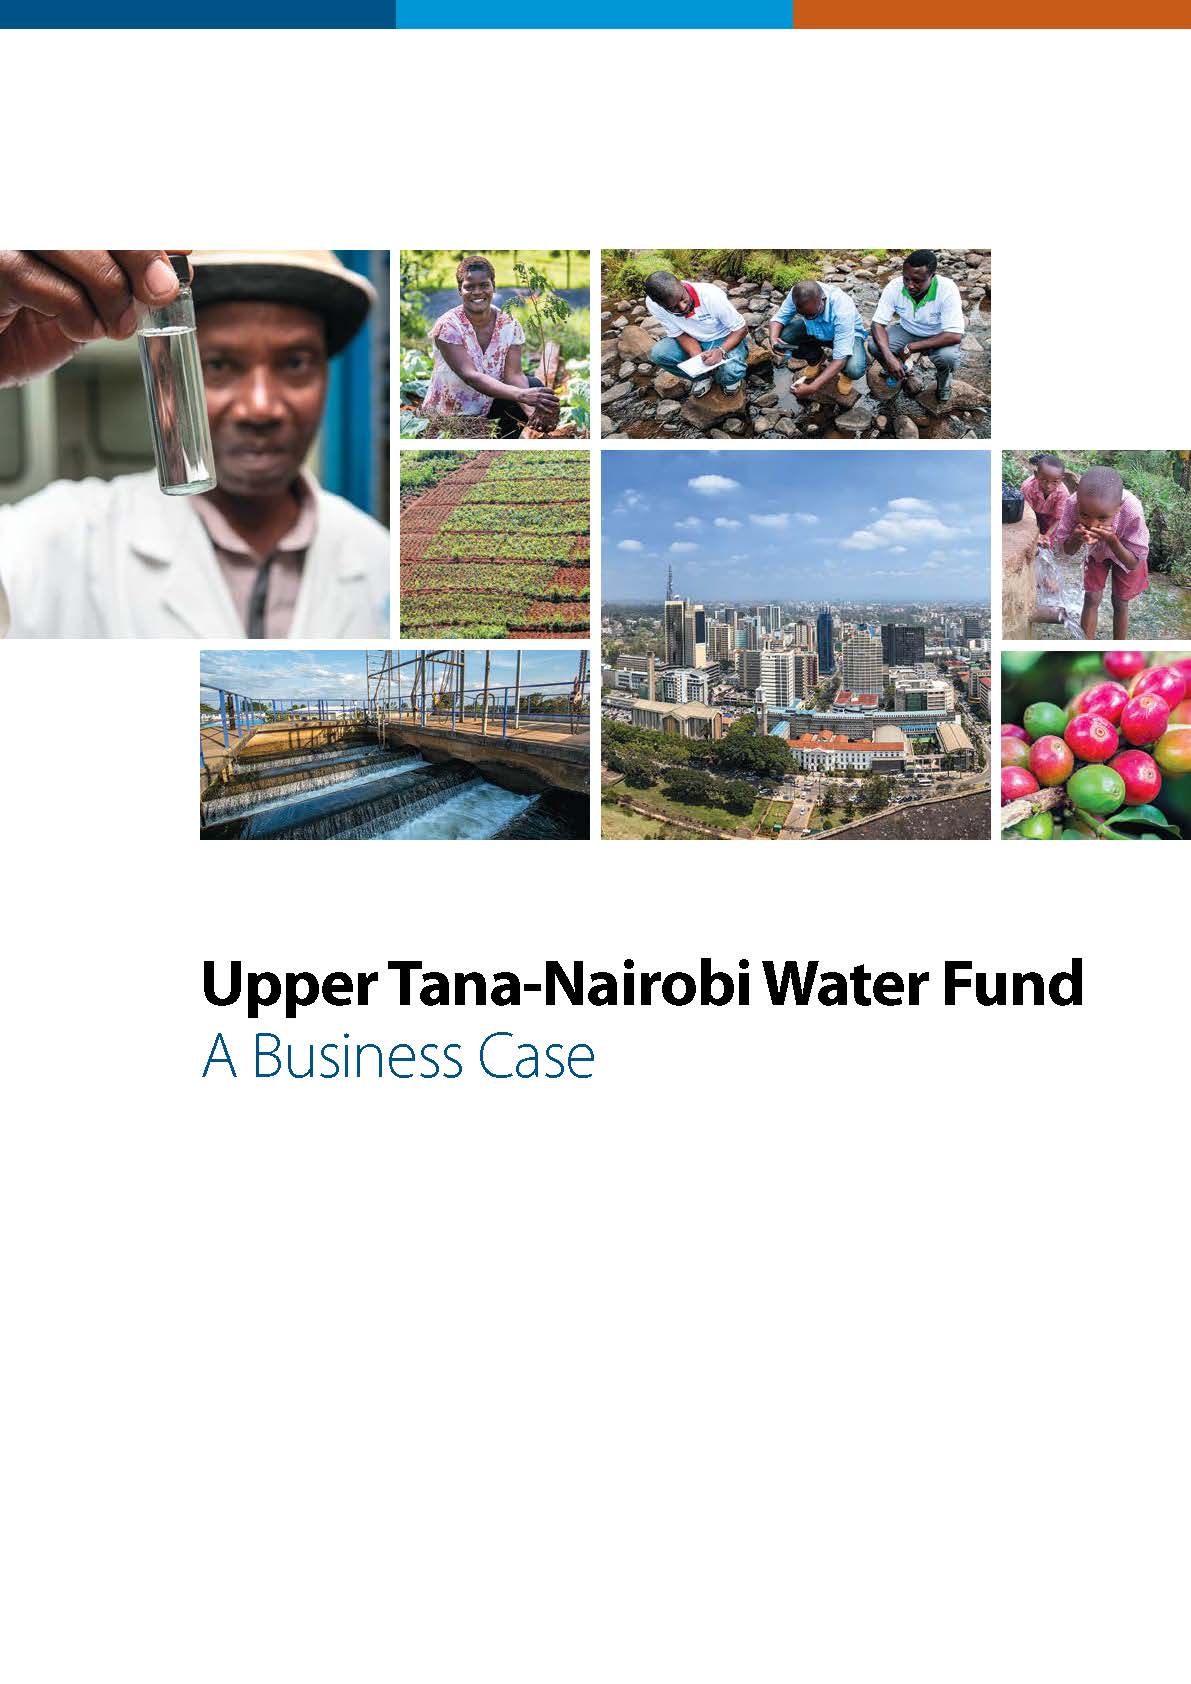 Image of Upper Tana Nairobi Water Fund business case